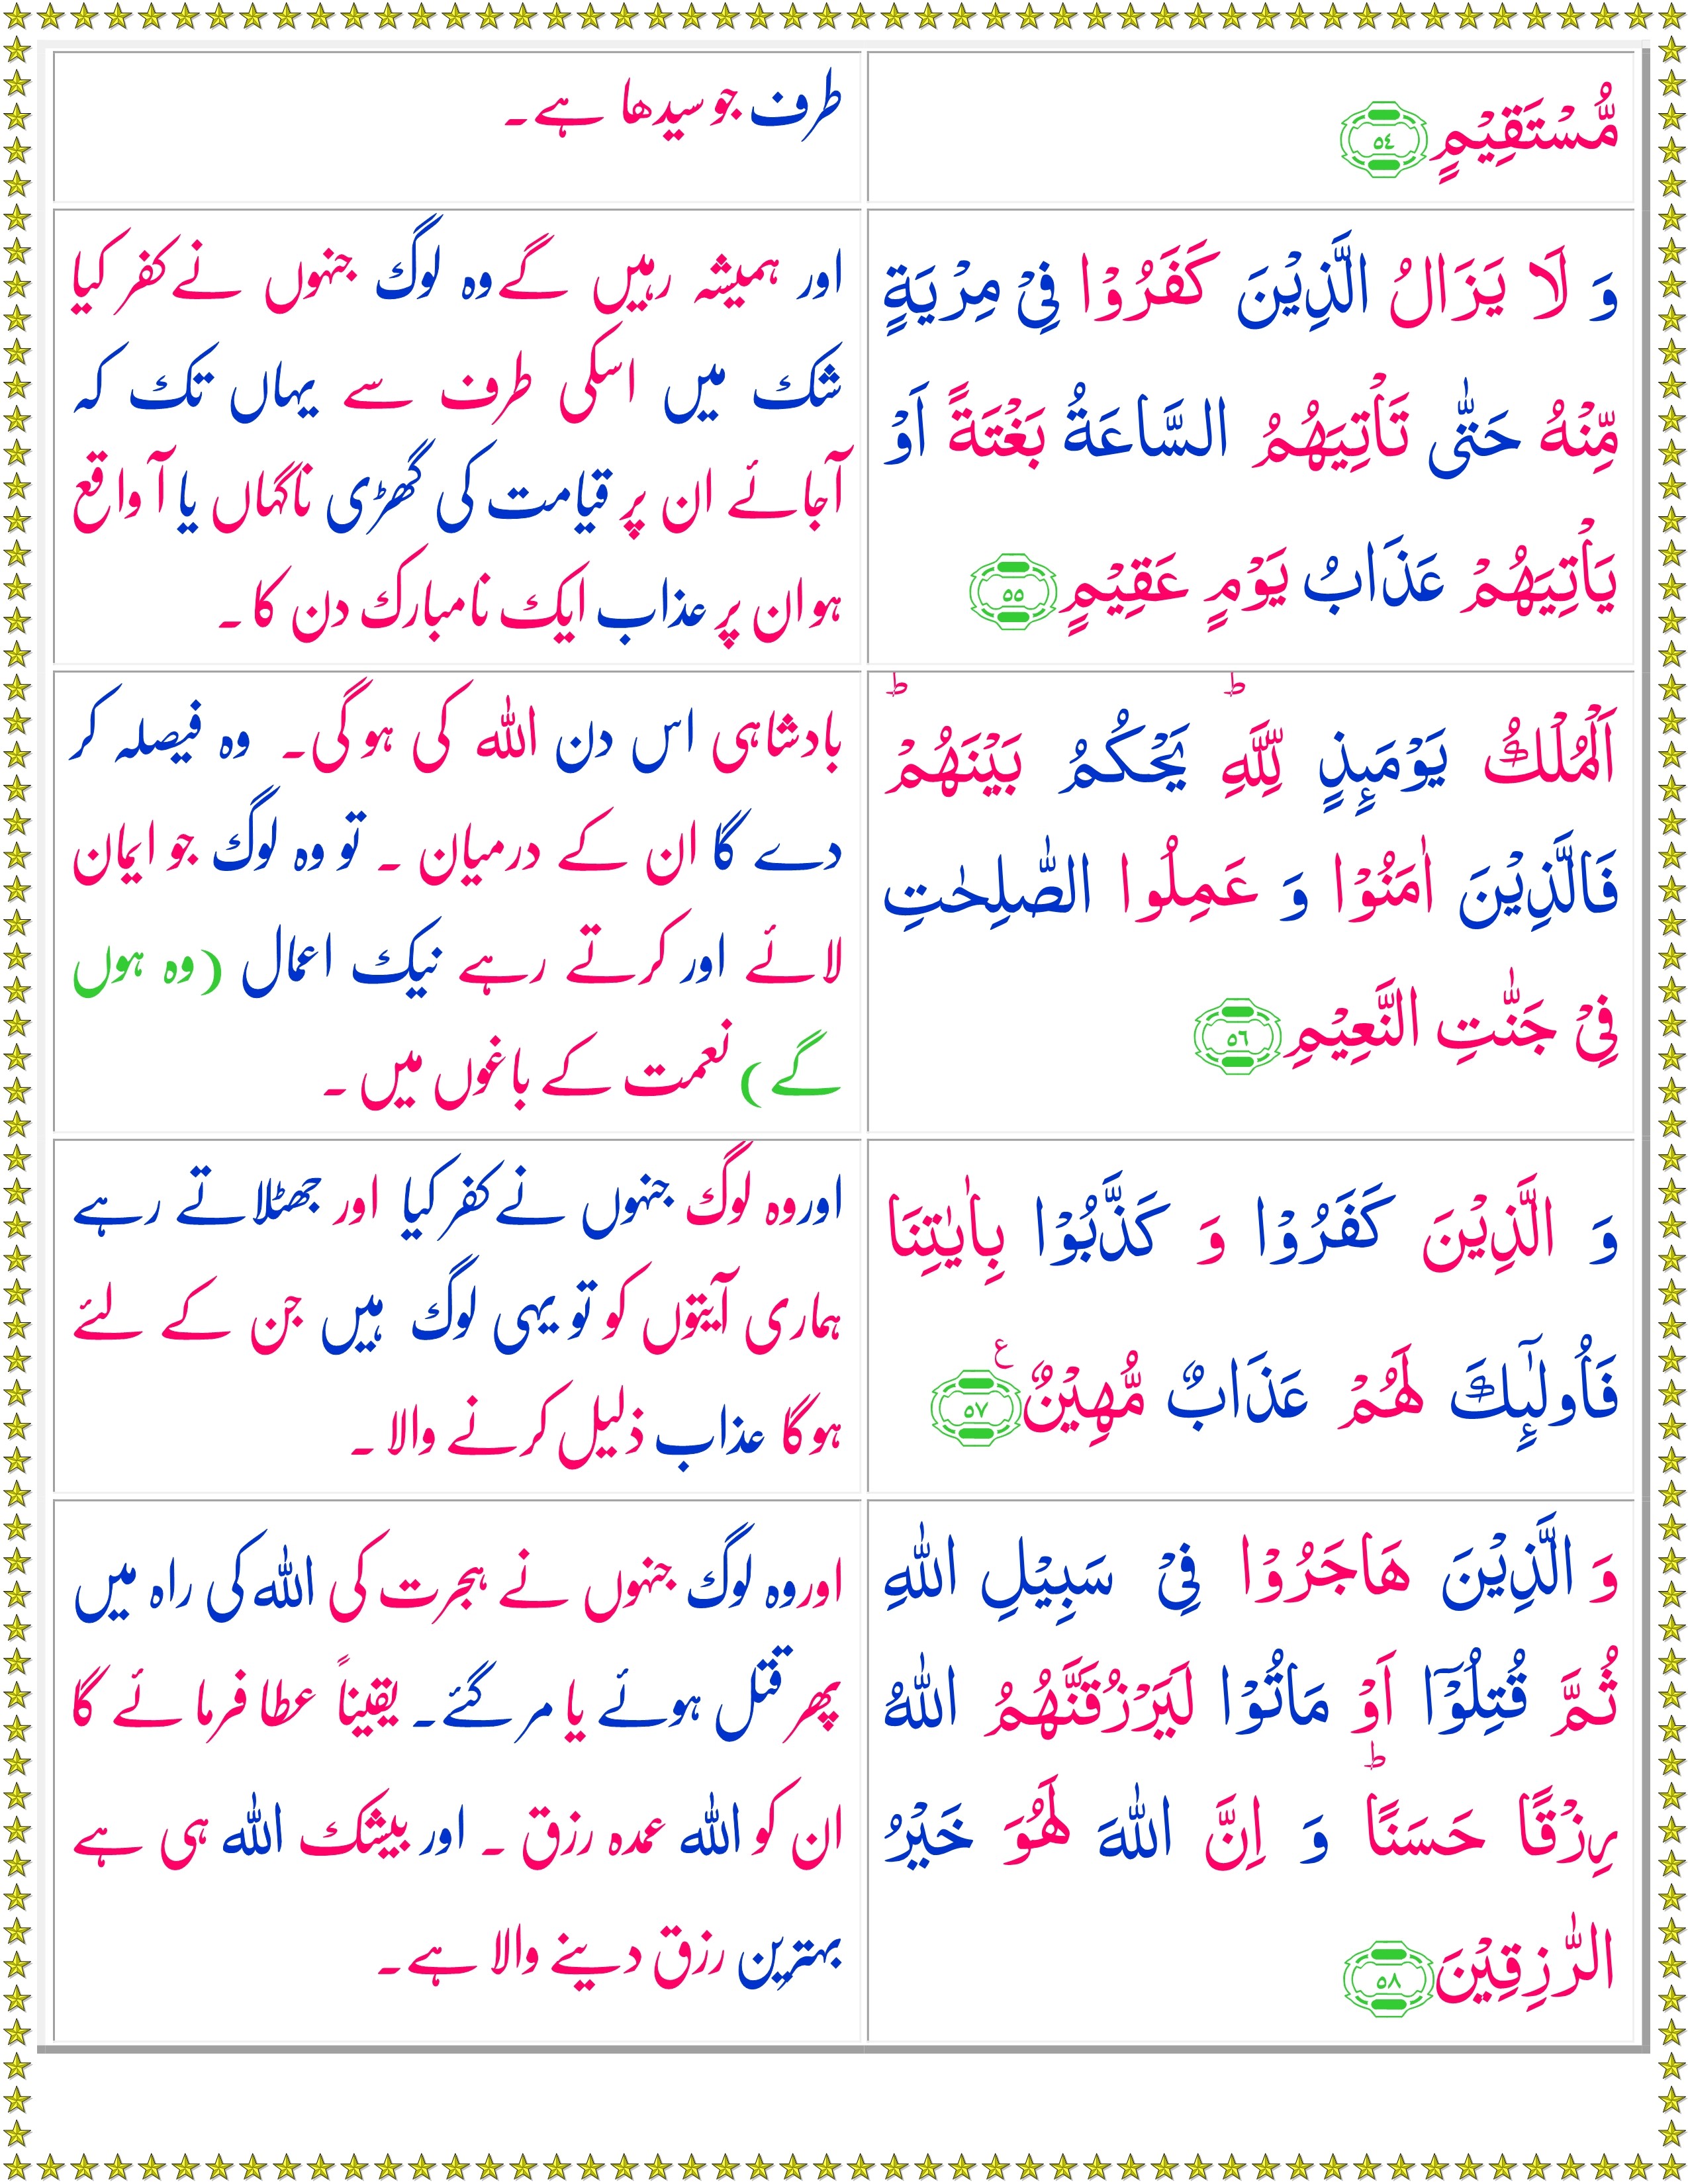 Surah Al Hajj Urdu Page 2 Of 2 Quran O Sunnat